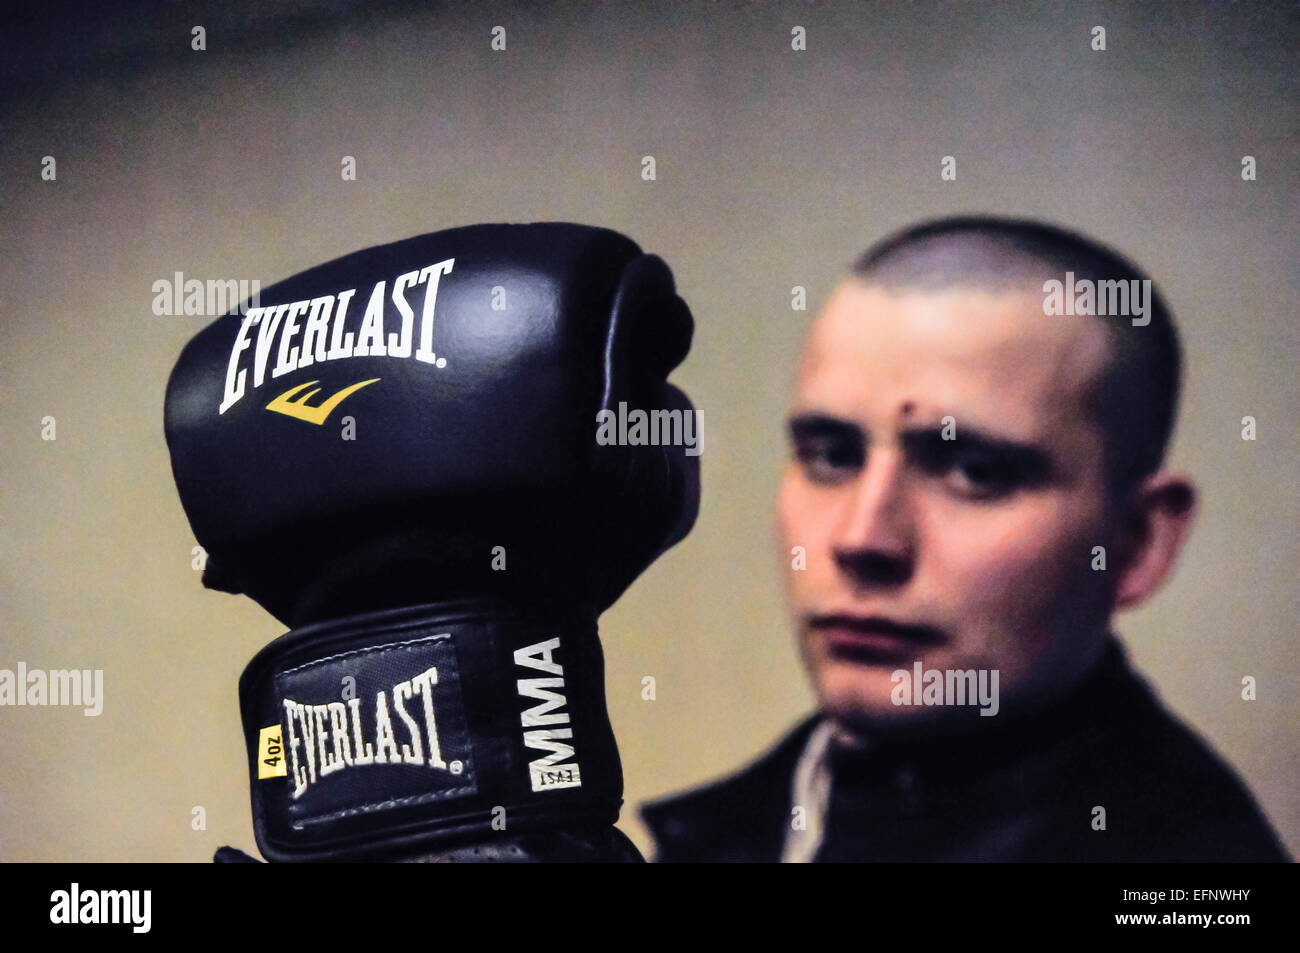 MMA fighter contient jusqu'son gant Everlast avant un combat Banque D'Images